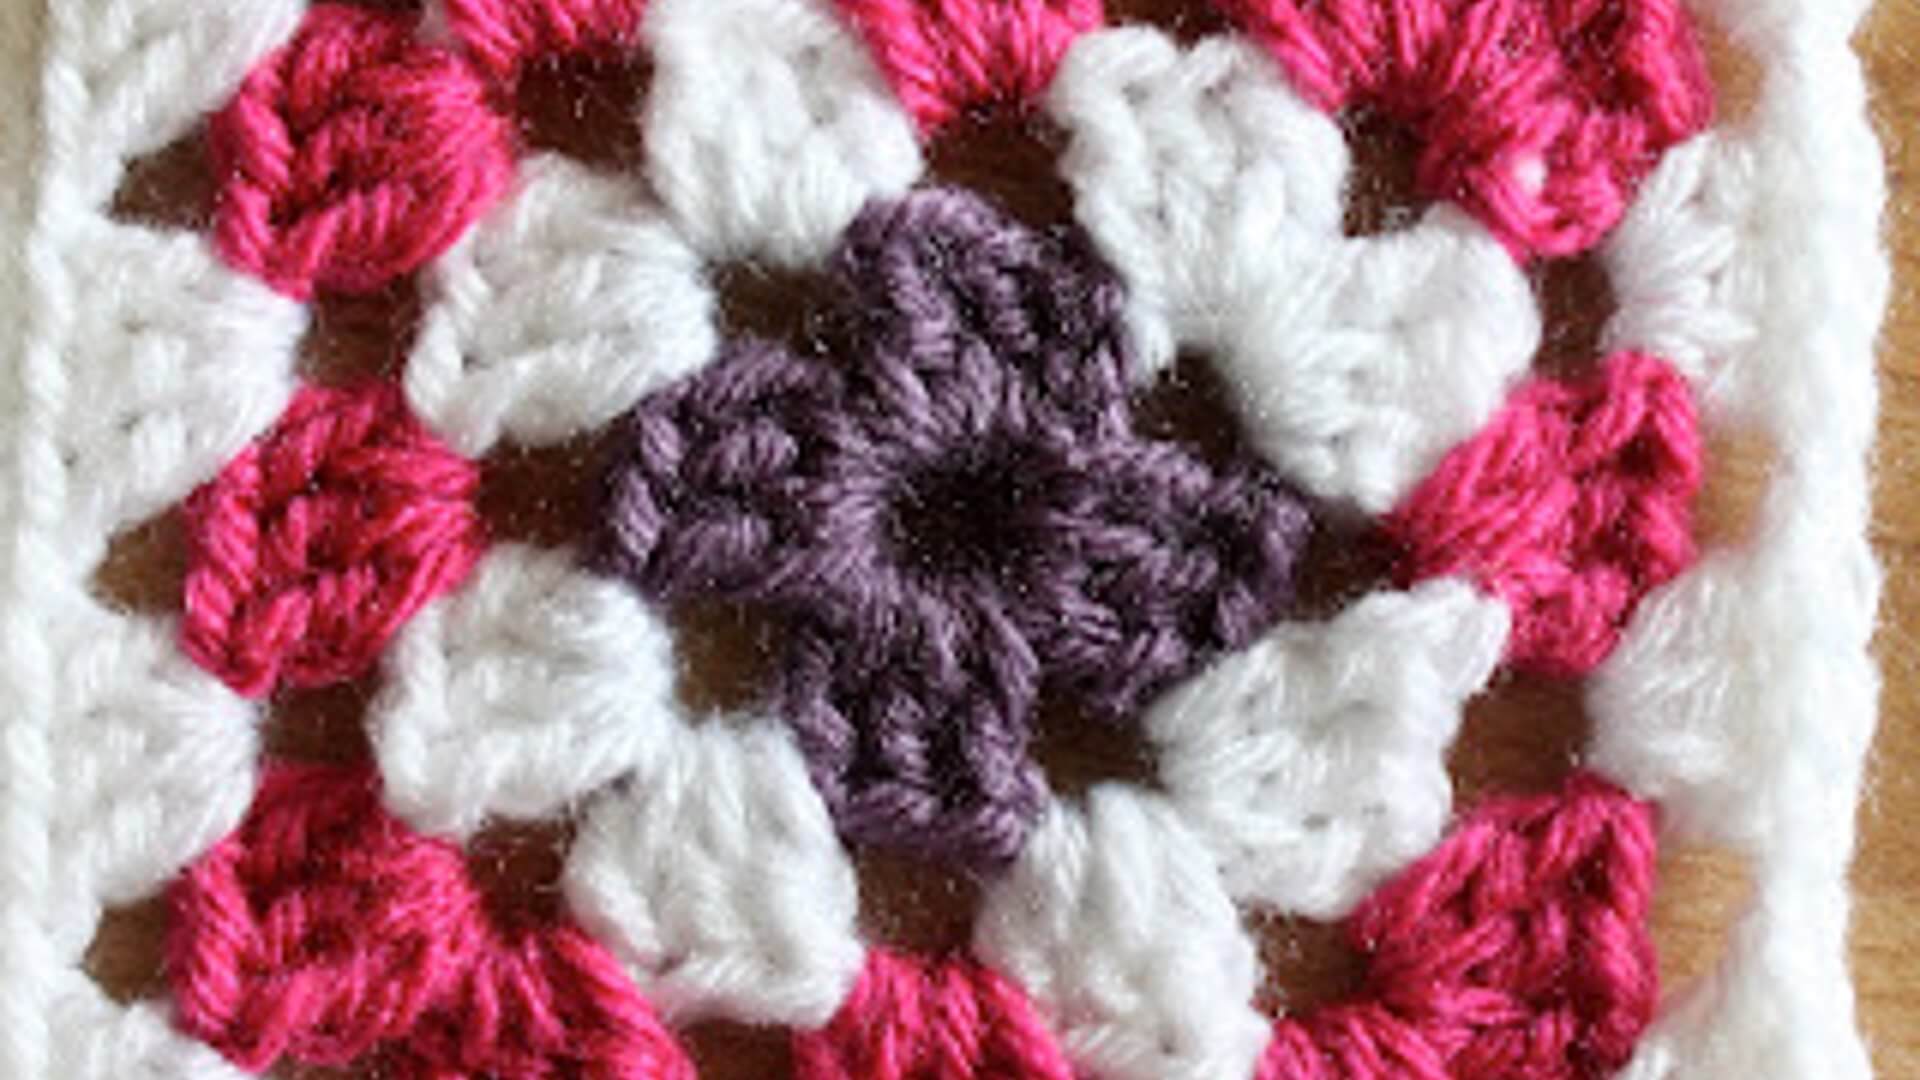 Learn to Crochet a Granny Square